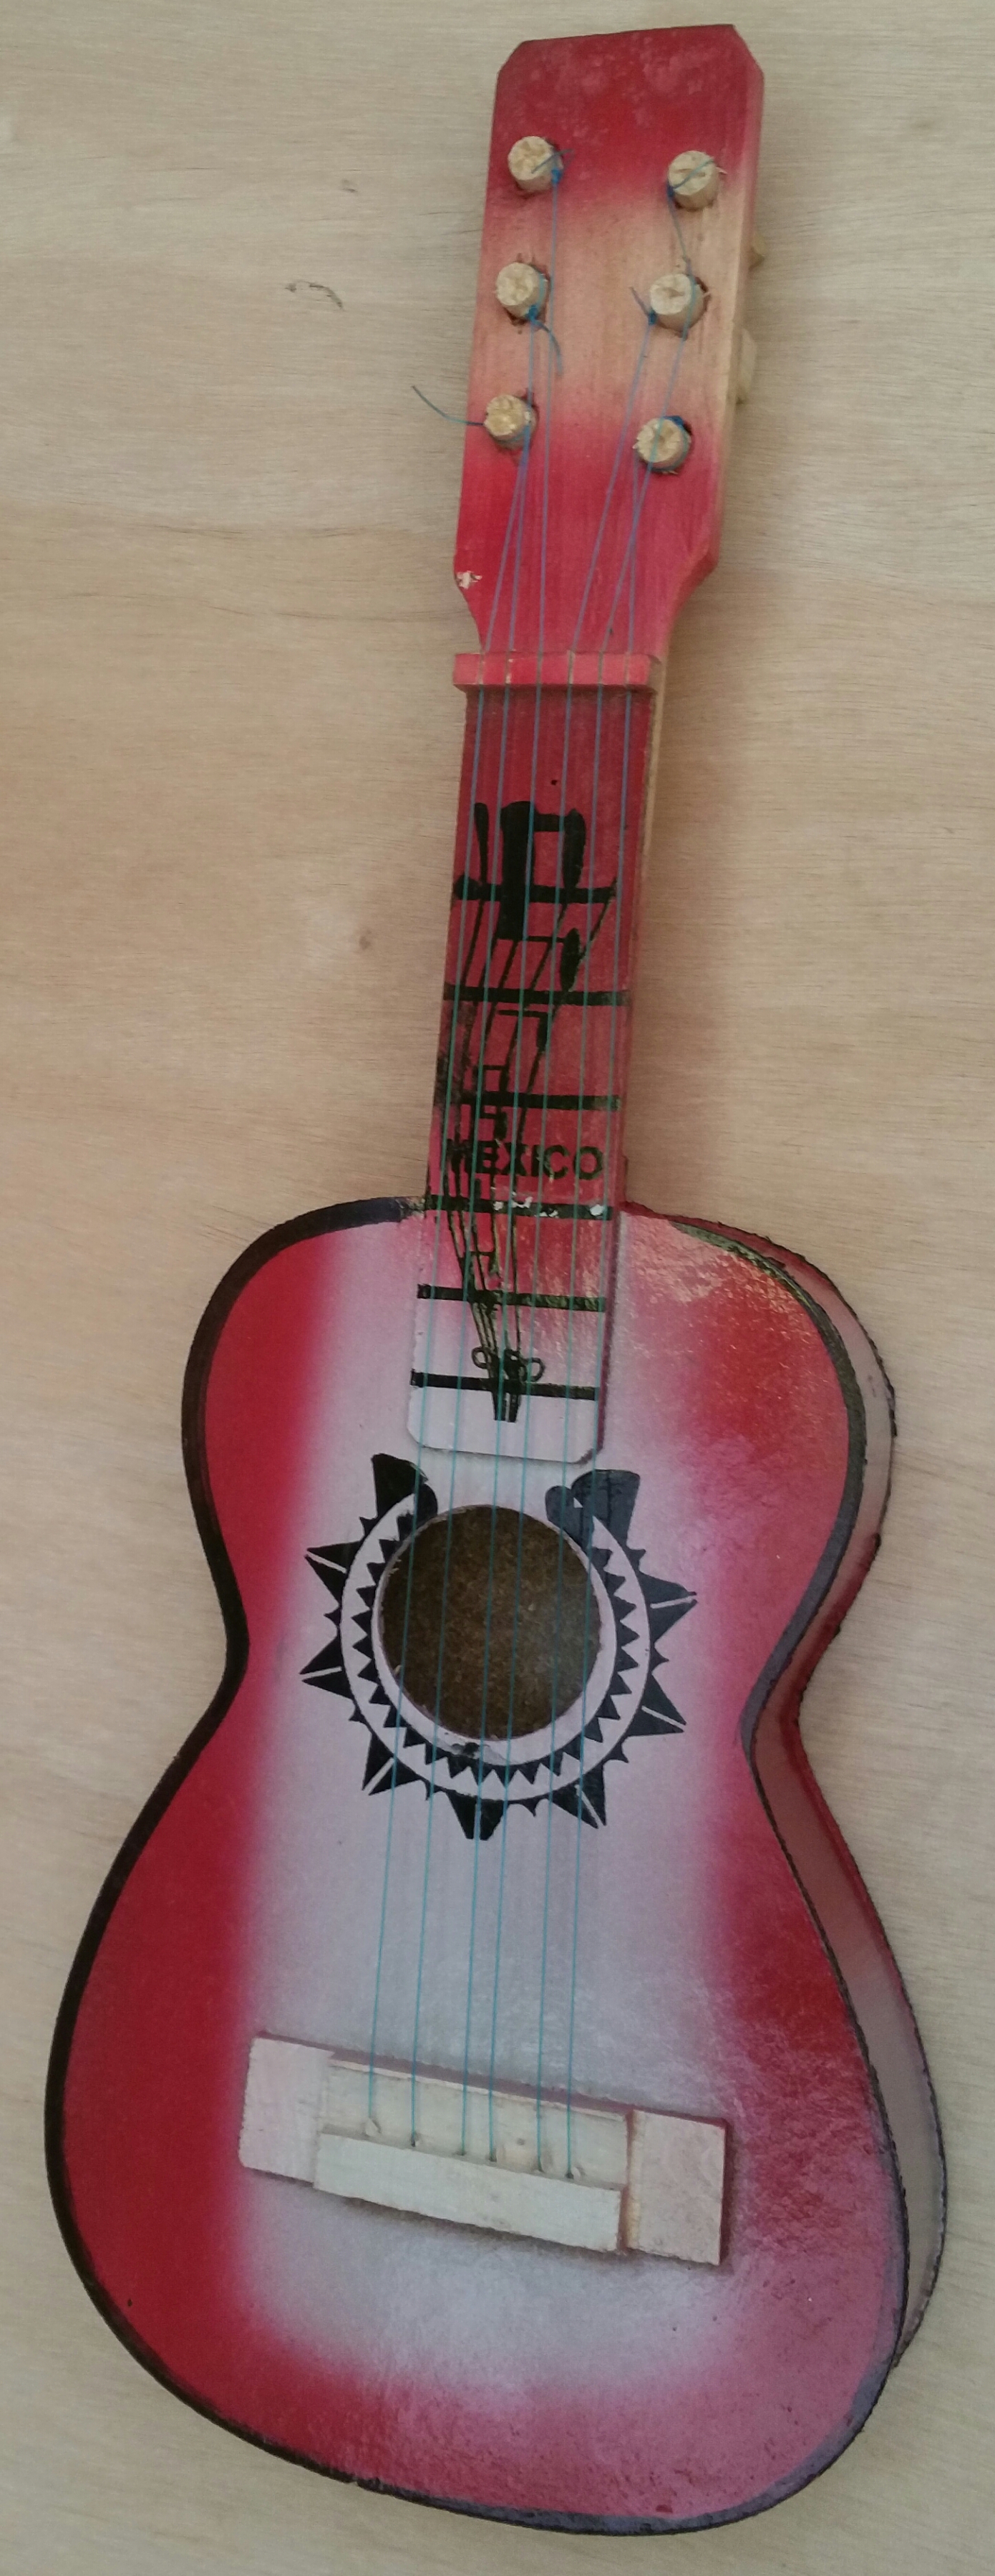 guitarras decorativas yucas folklóricas (pz)